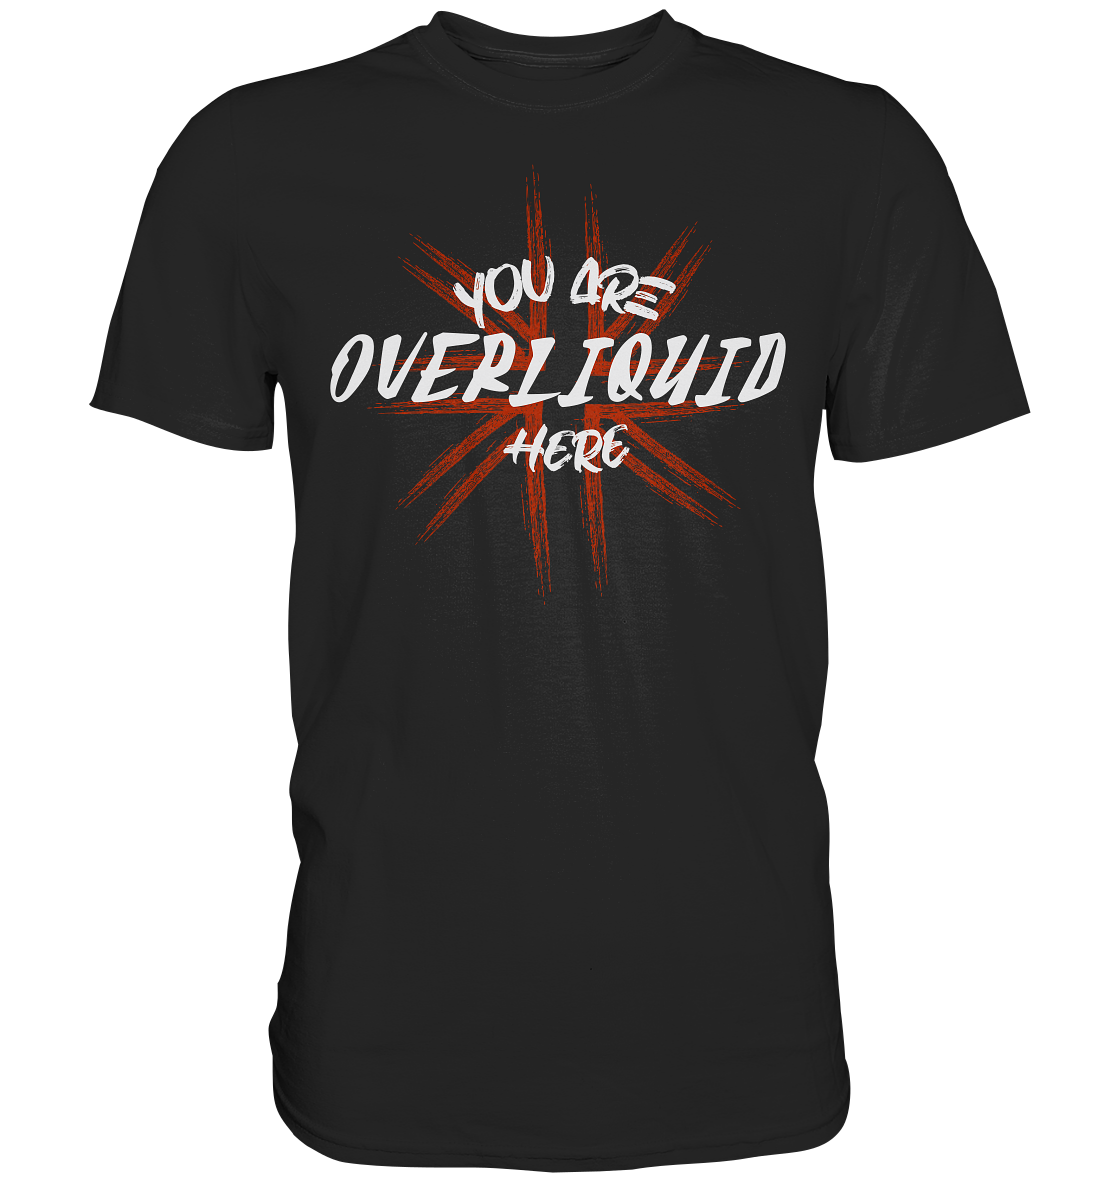 "You are overliquid here" - Premium Shirt